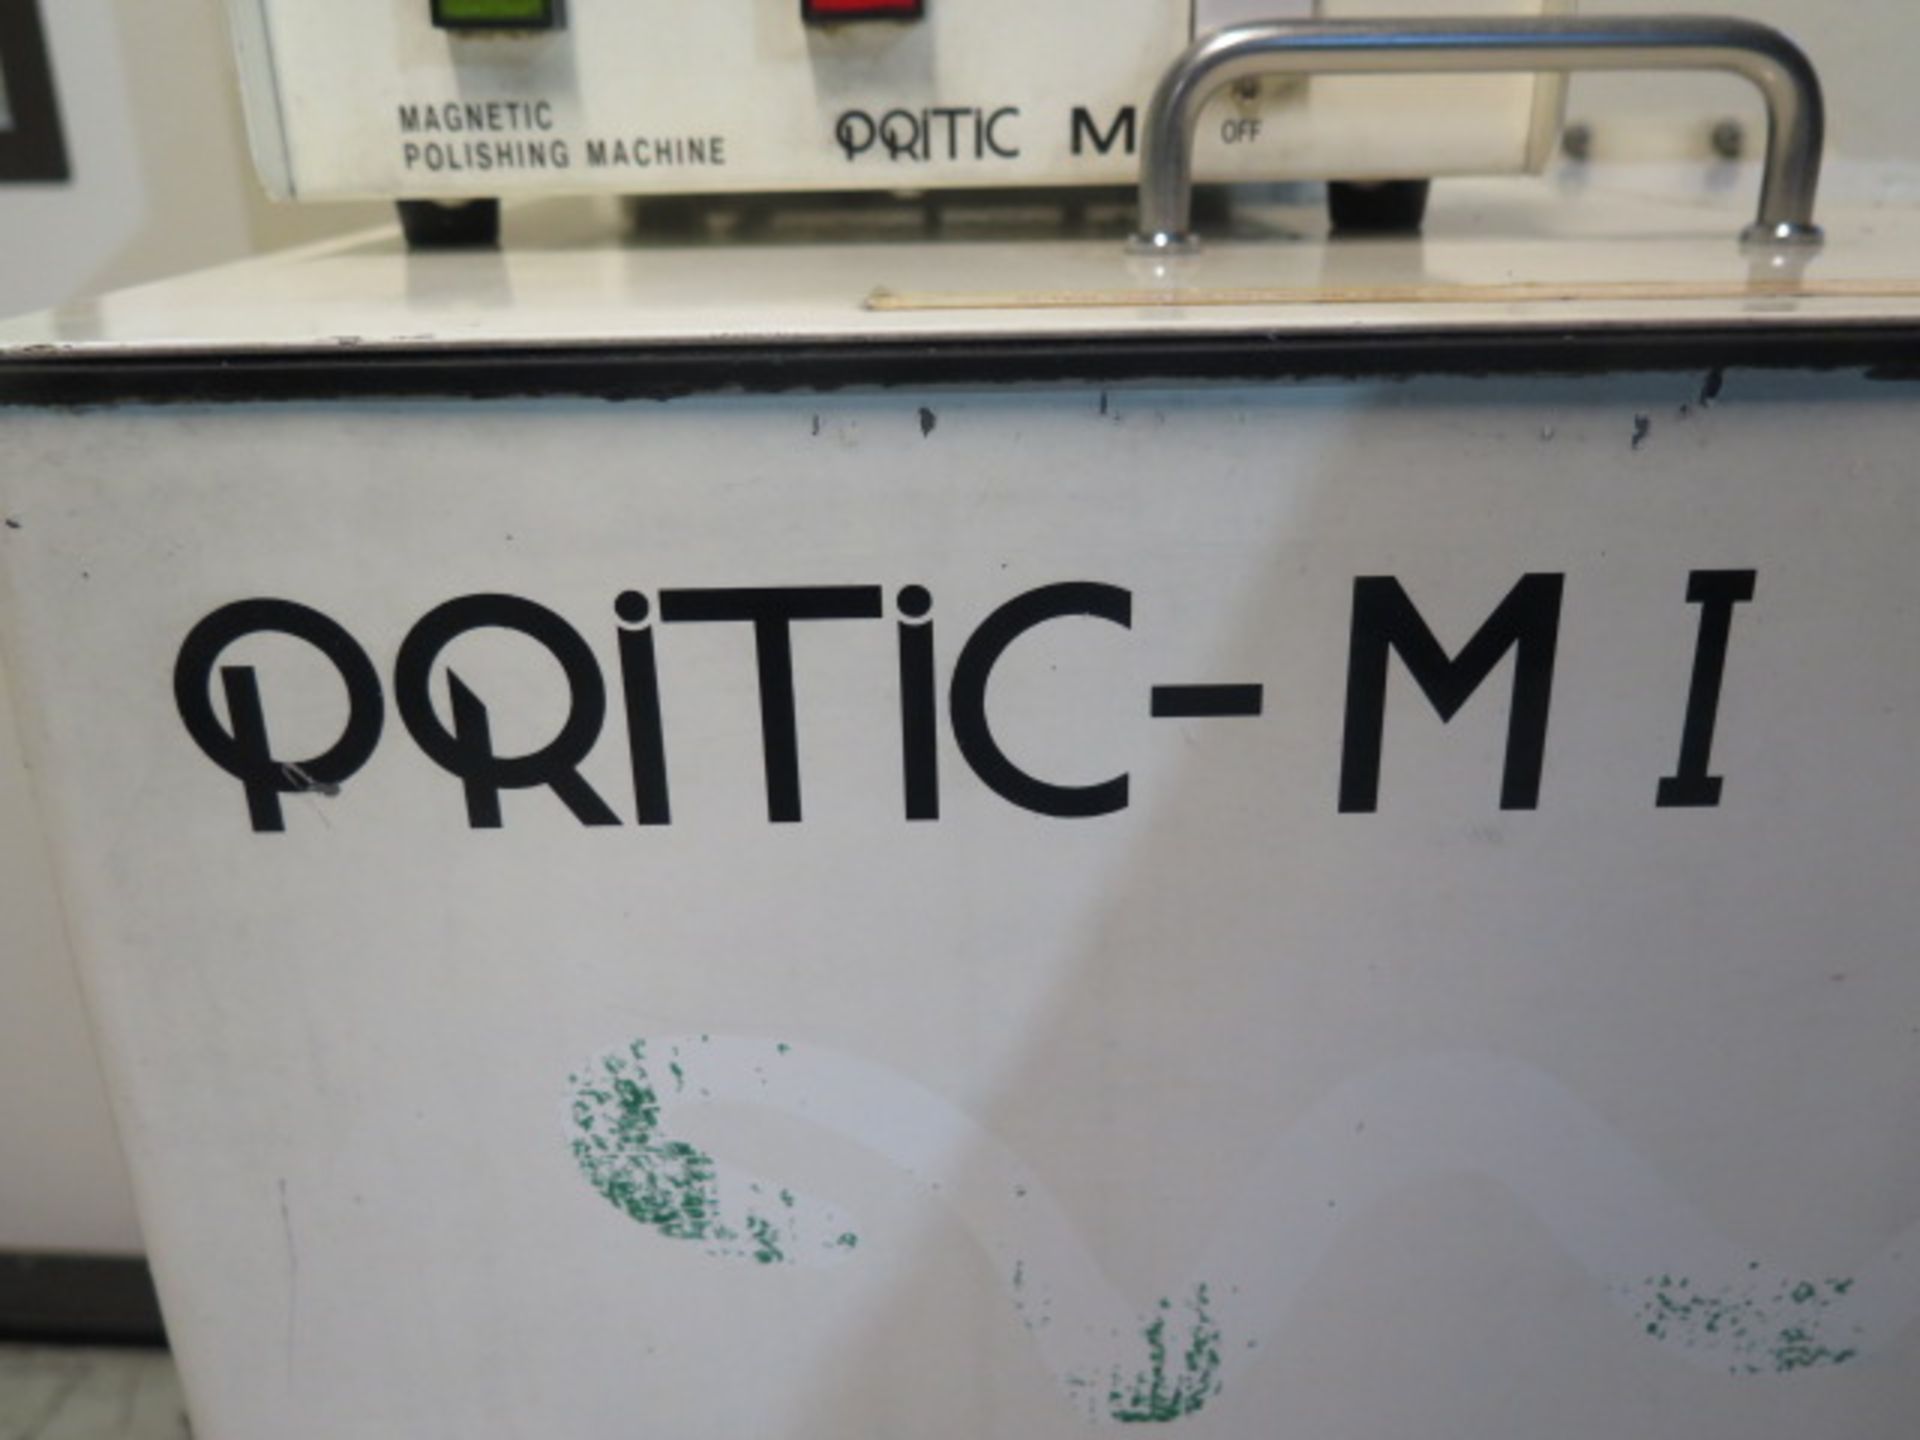 Pritic Magnetic Polishing Machine w/ Pritic-M Controls, Pritic-MI Magnetic Field Generation Tank, - Image 8 of 11